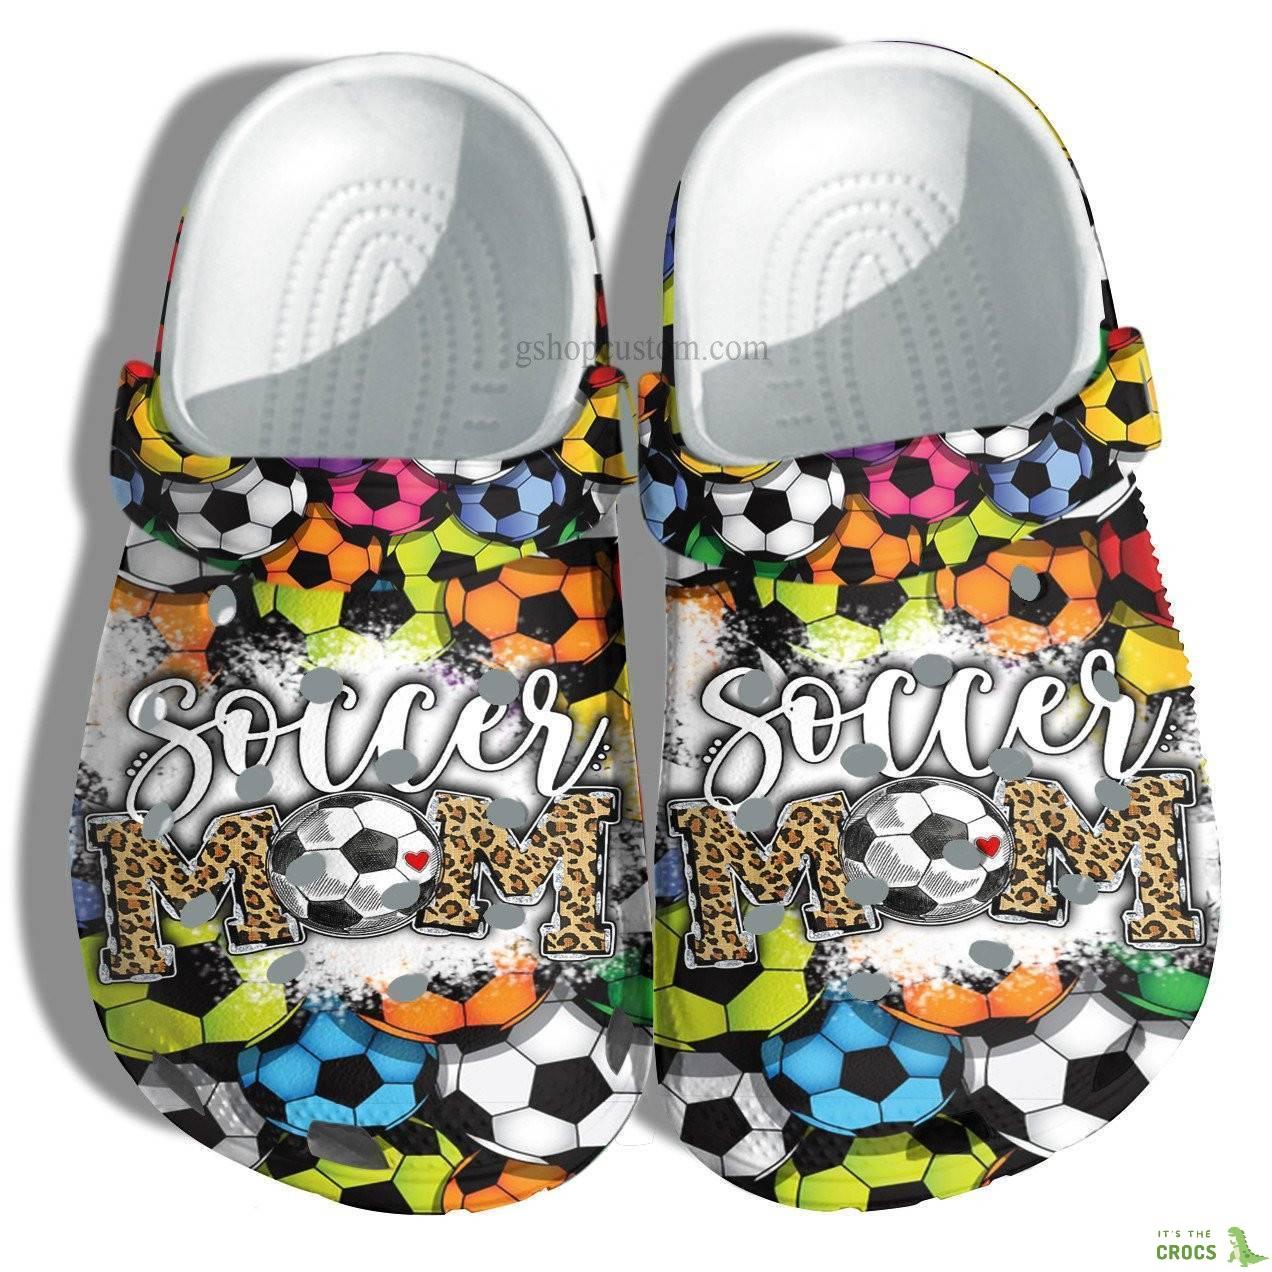 Soccor Mom Rainbow Croc Shoes Leopar Style – Football Mom Leopard Crocs Shoes Gift Women Grandma